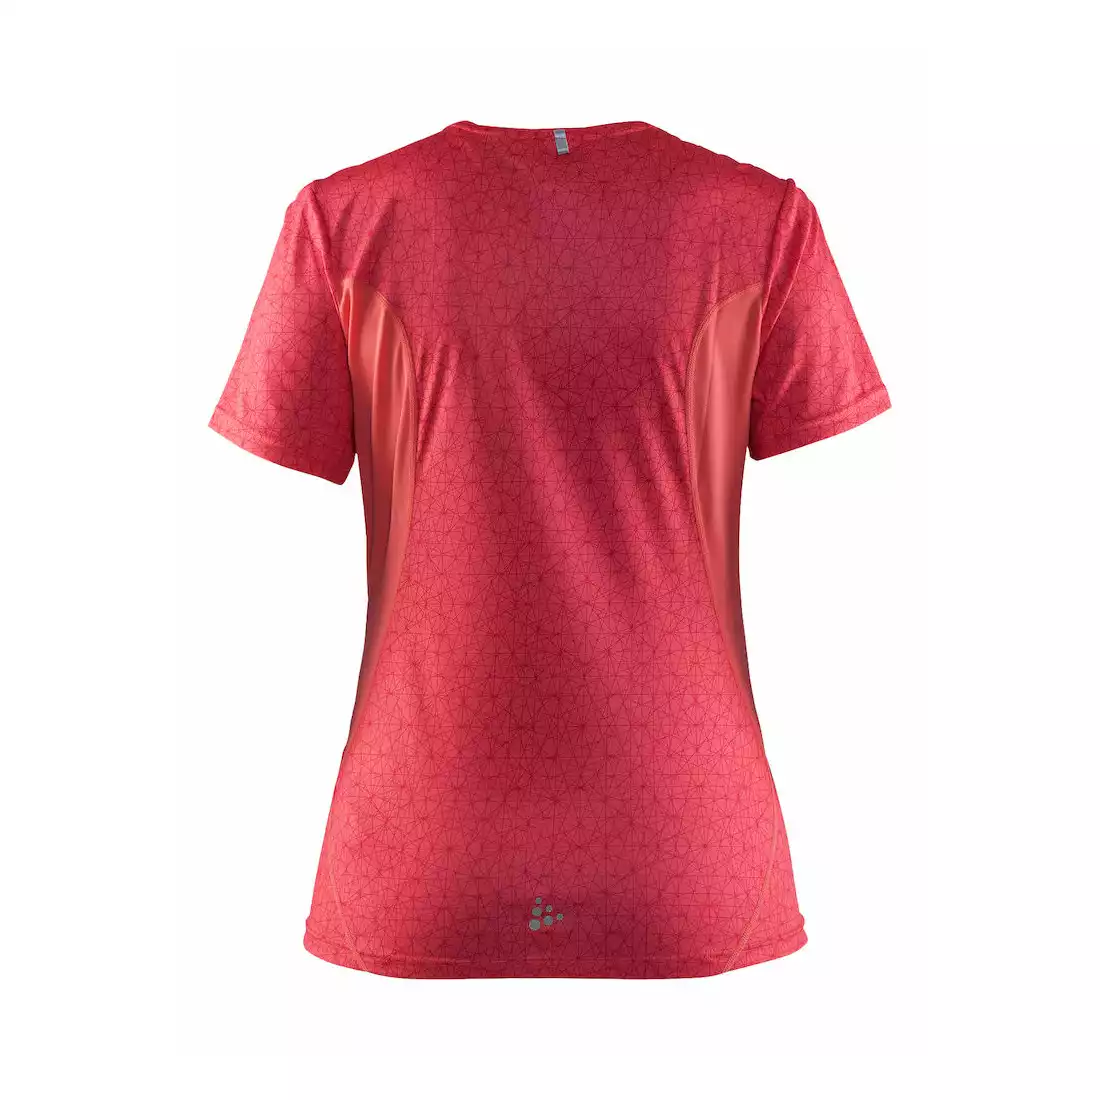 CRAFT RUN Mind - damska koszulka do biegania 1903942 - 1070